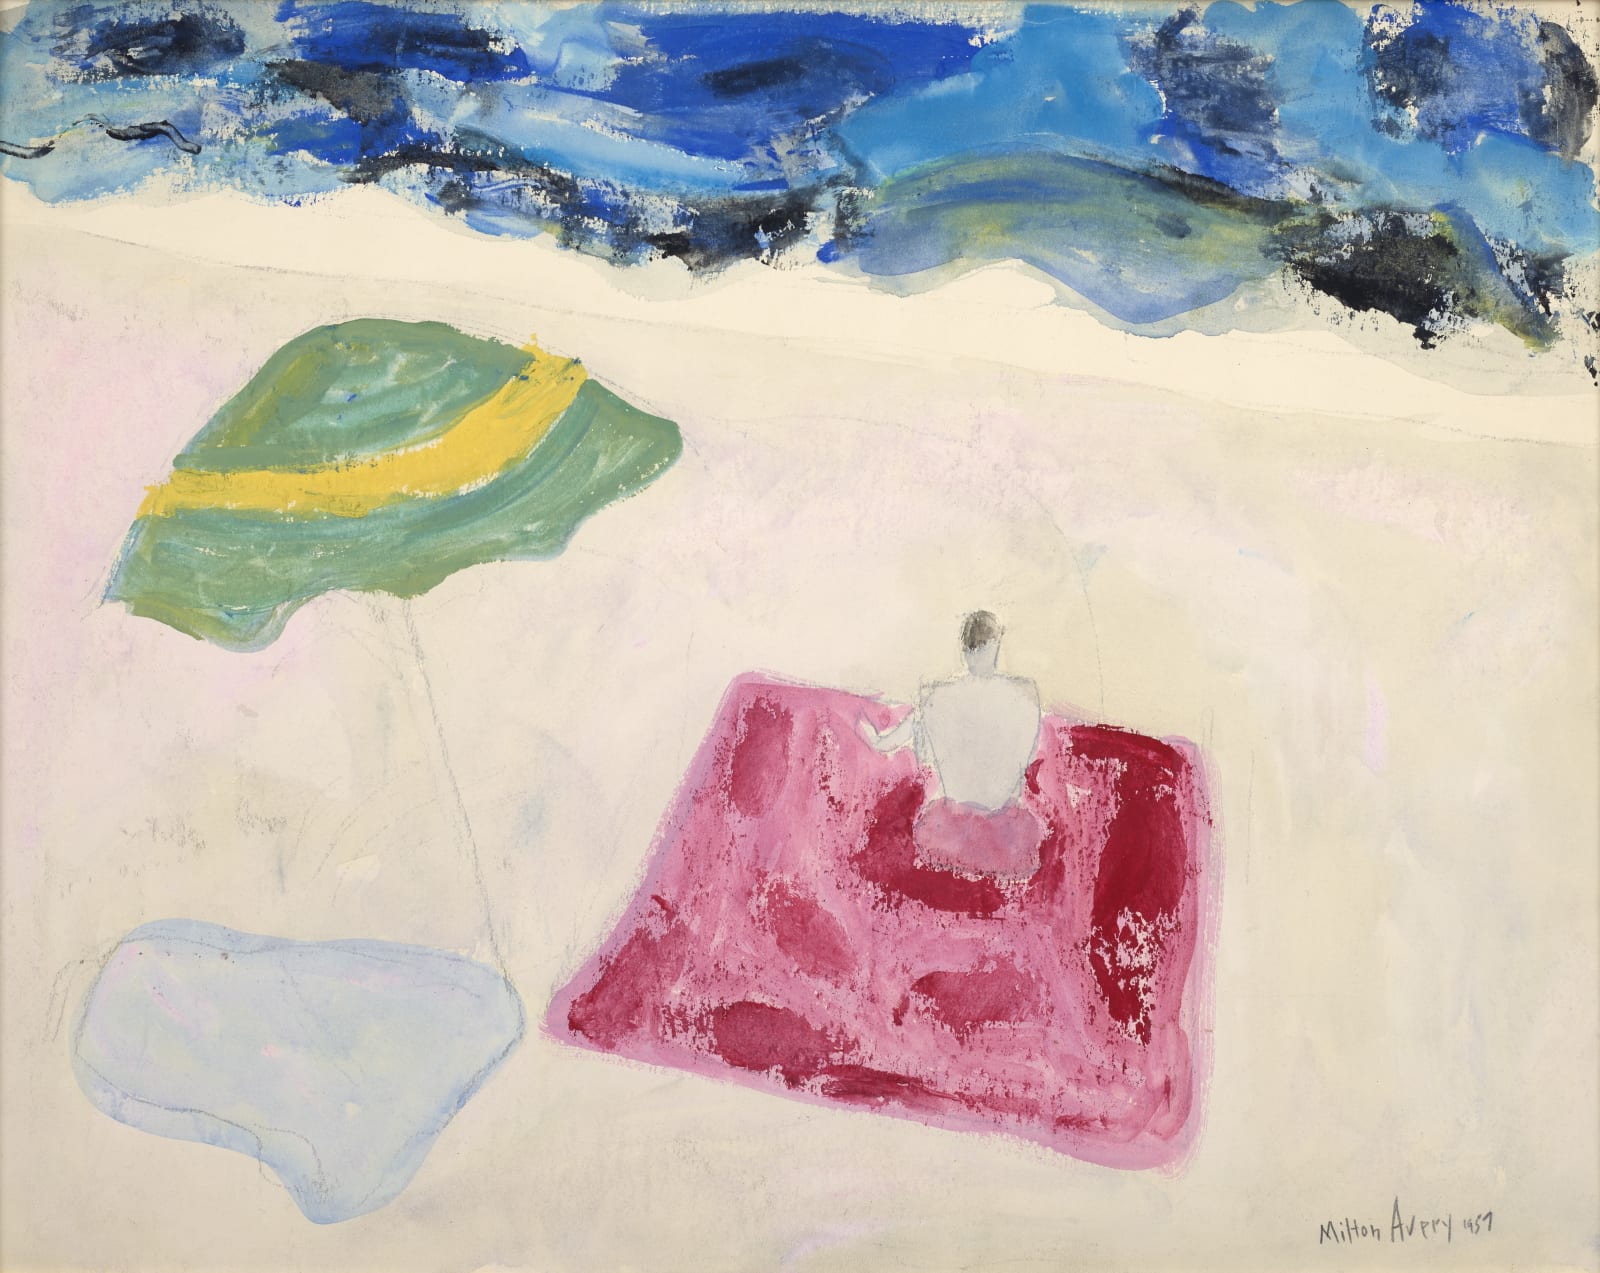 Milton Avery, Figure on the Beach (Lone Sunbather), 1957